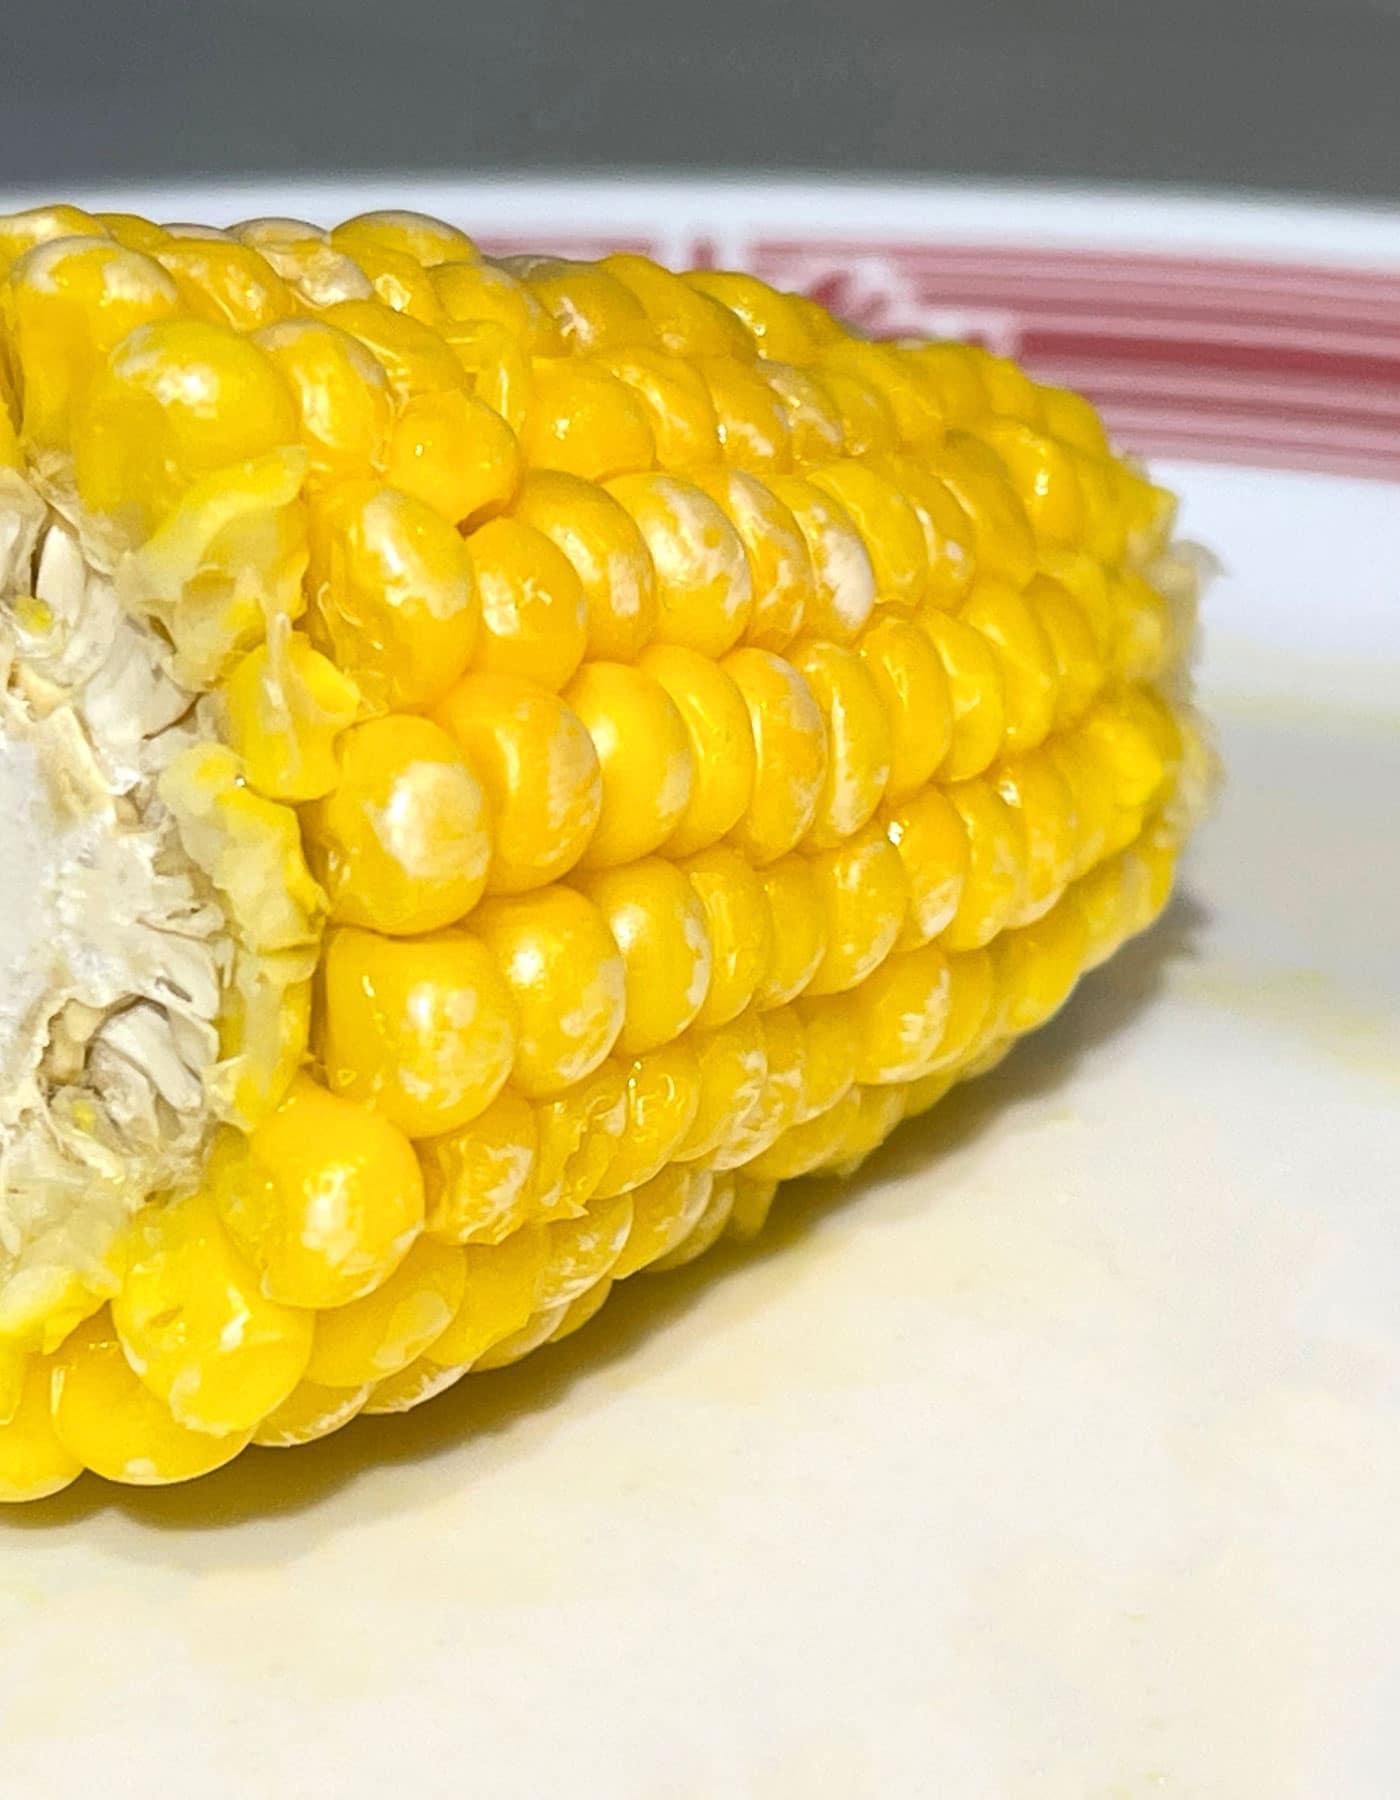 microwave corn on the cob